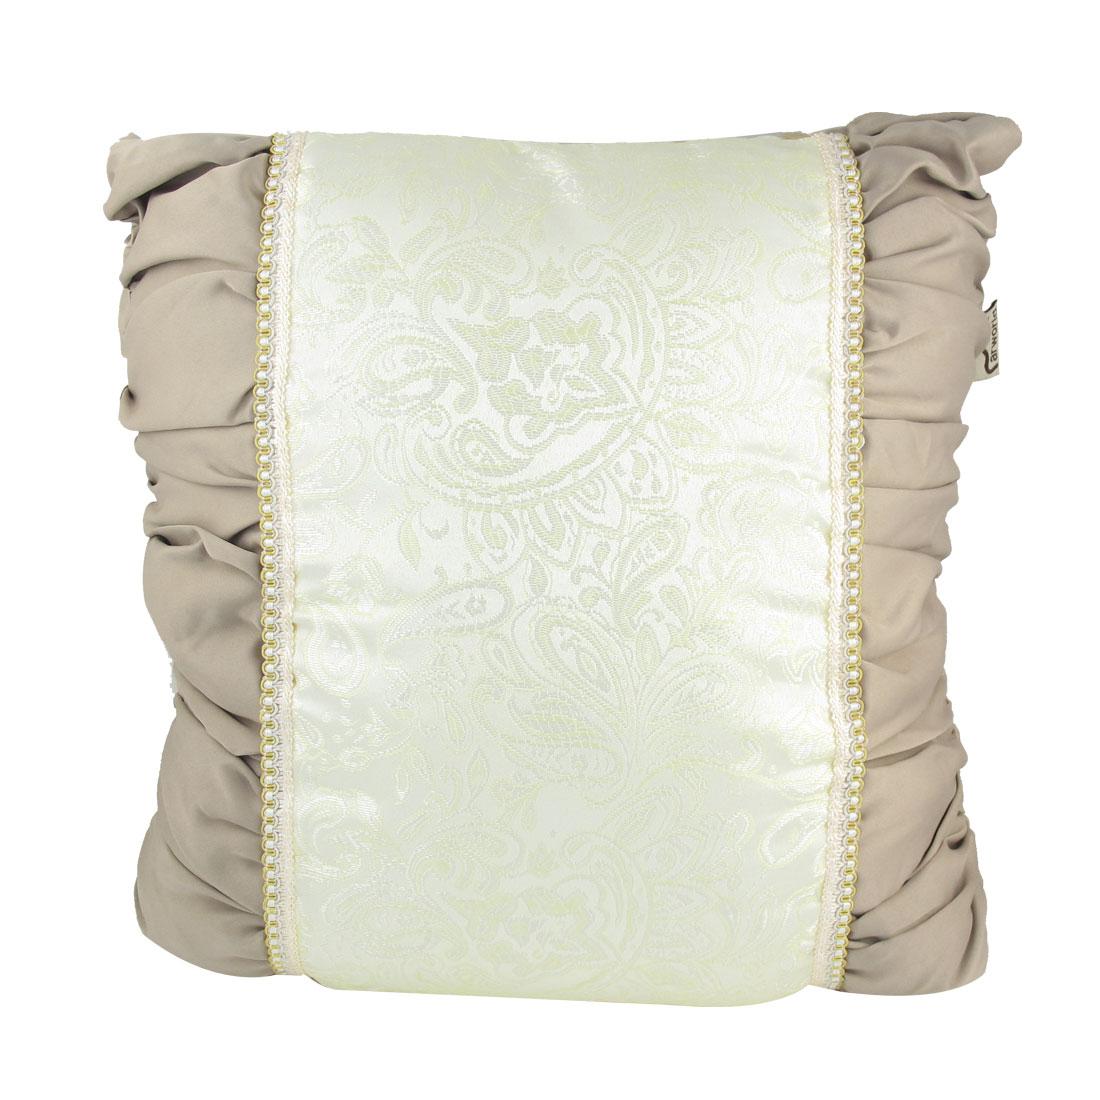 Auto car khaki beige floral pattern zip up closure throw pillow cushion